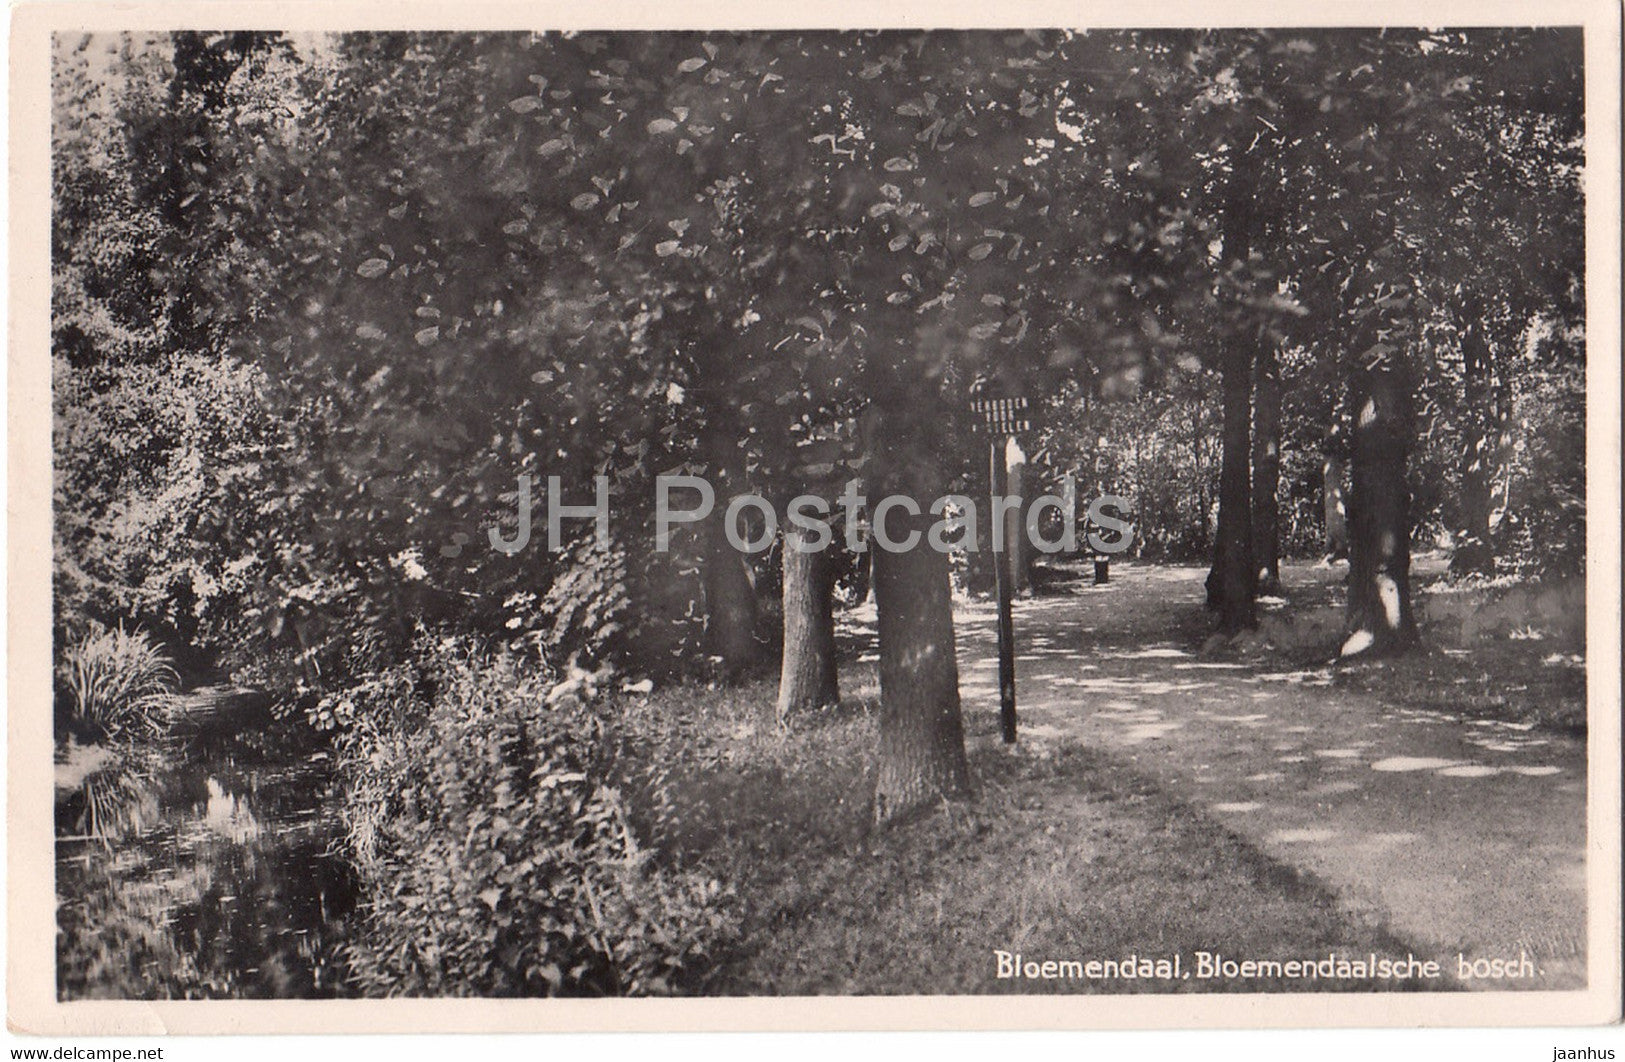 Bloemendaal - Bloemendaalsche Bosch - 3650 - old postcard - 1942 - Netherlands - used - JH Postcards